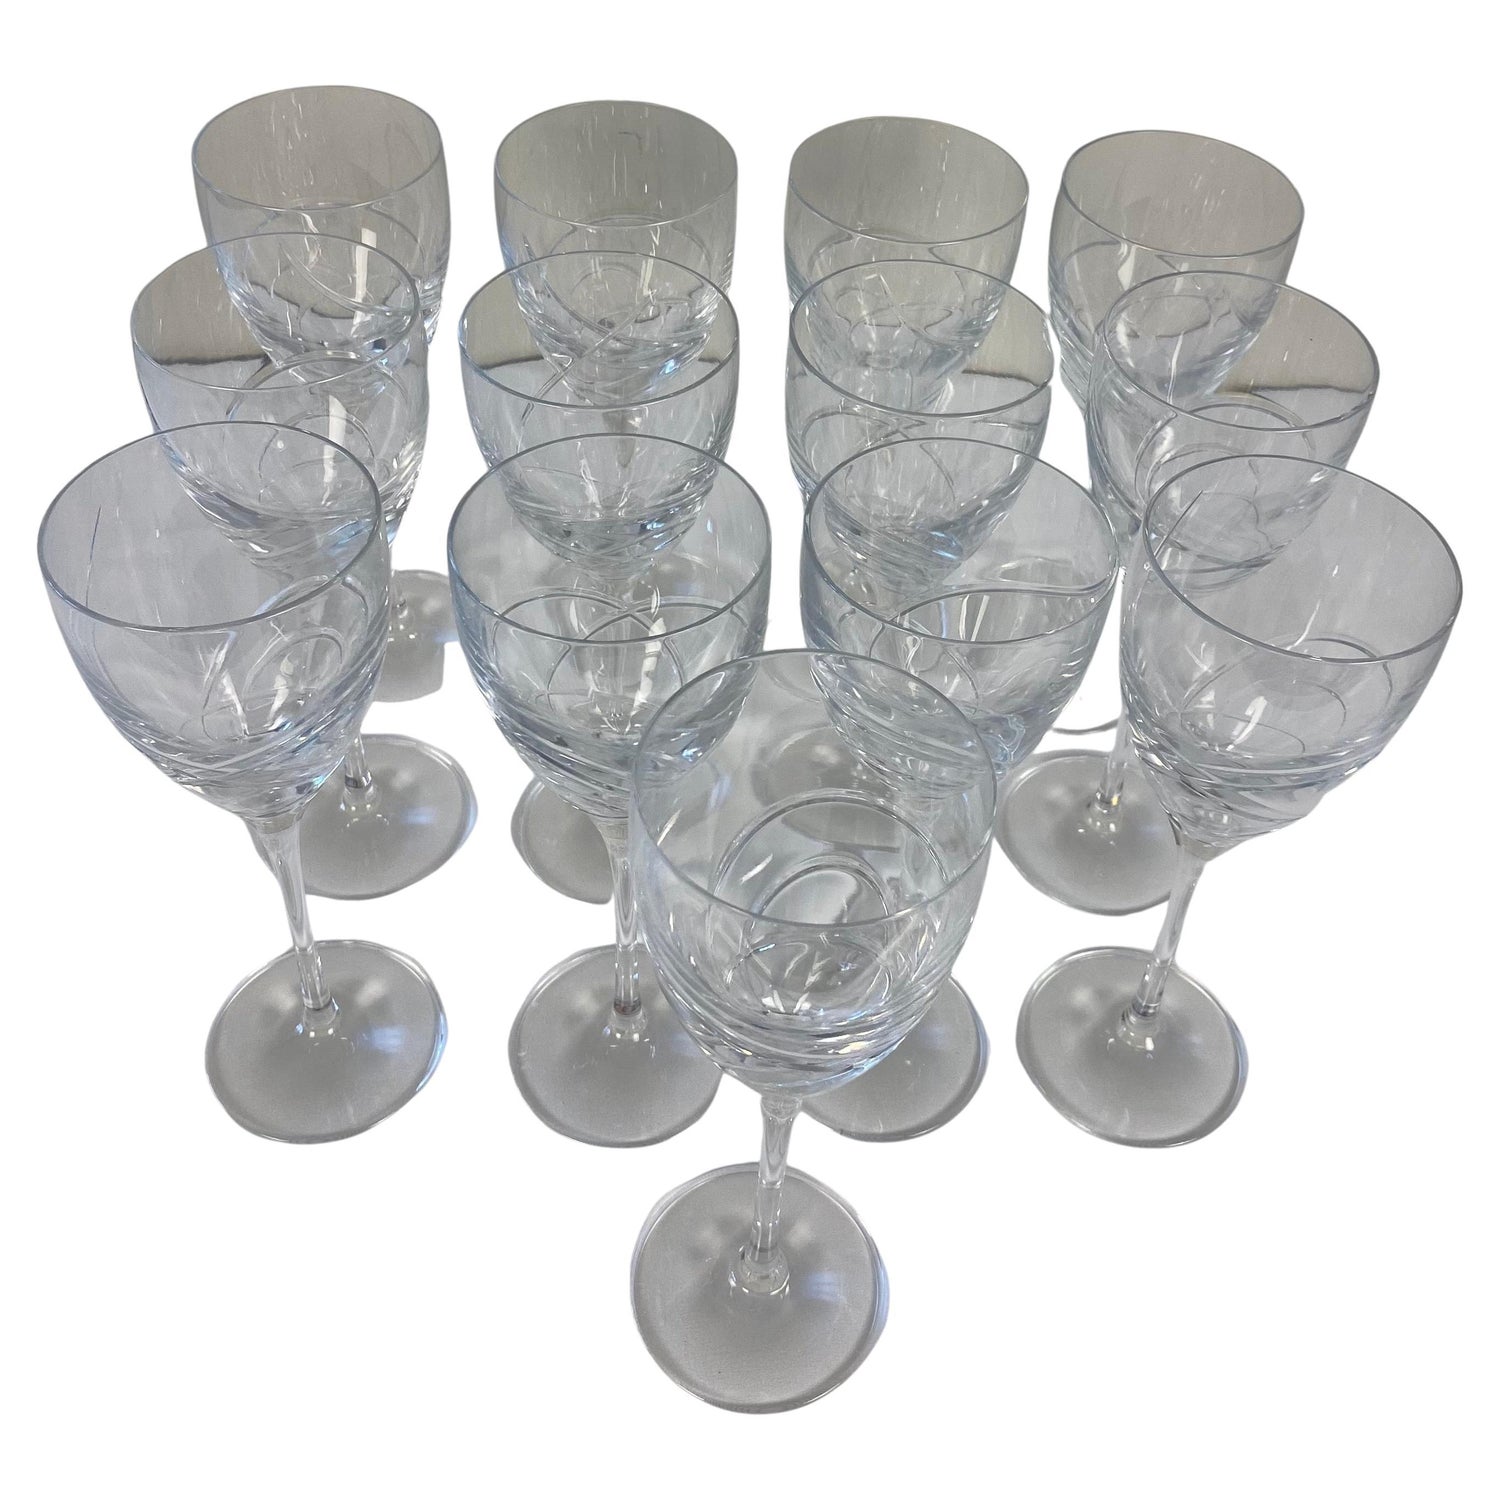 https://a.1stdibscdn.com/set-of-12-cut-crystal-wine-glasses-by-lenox-for-sale/f_40821/f_310386821666898353432/f_31038682_1666898354665_bg_processed.jpg?width=1500